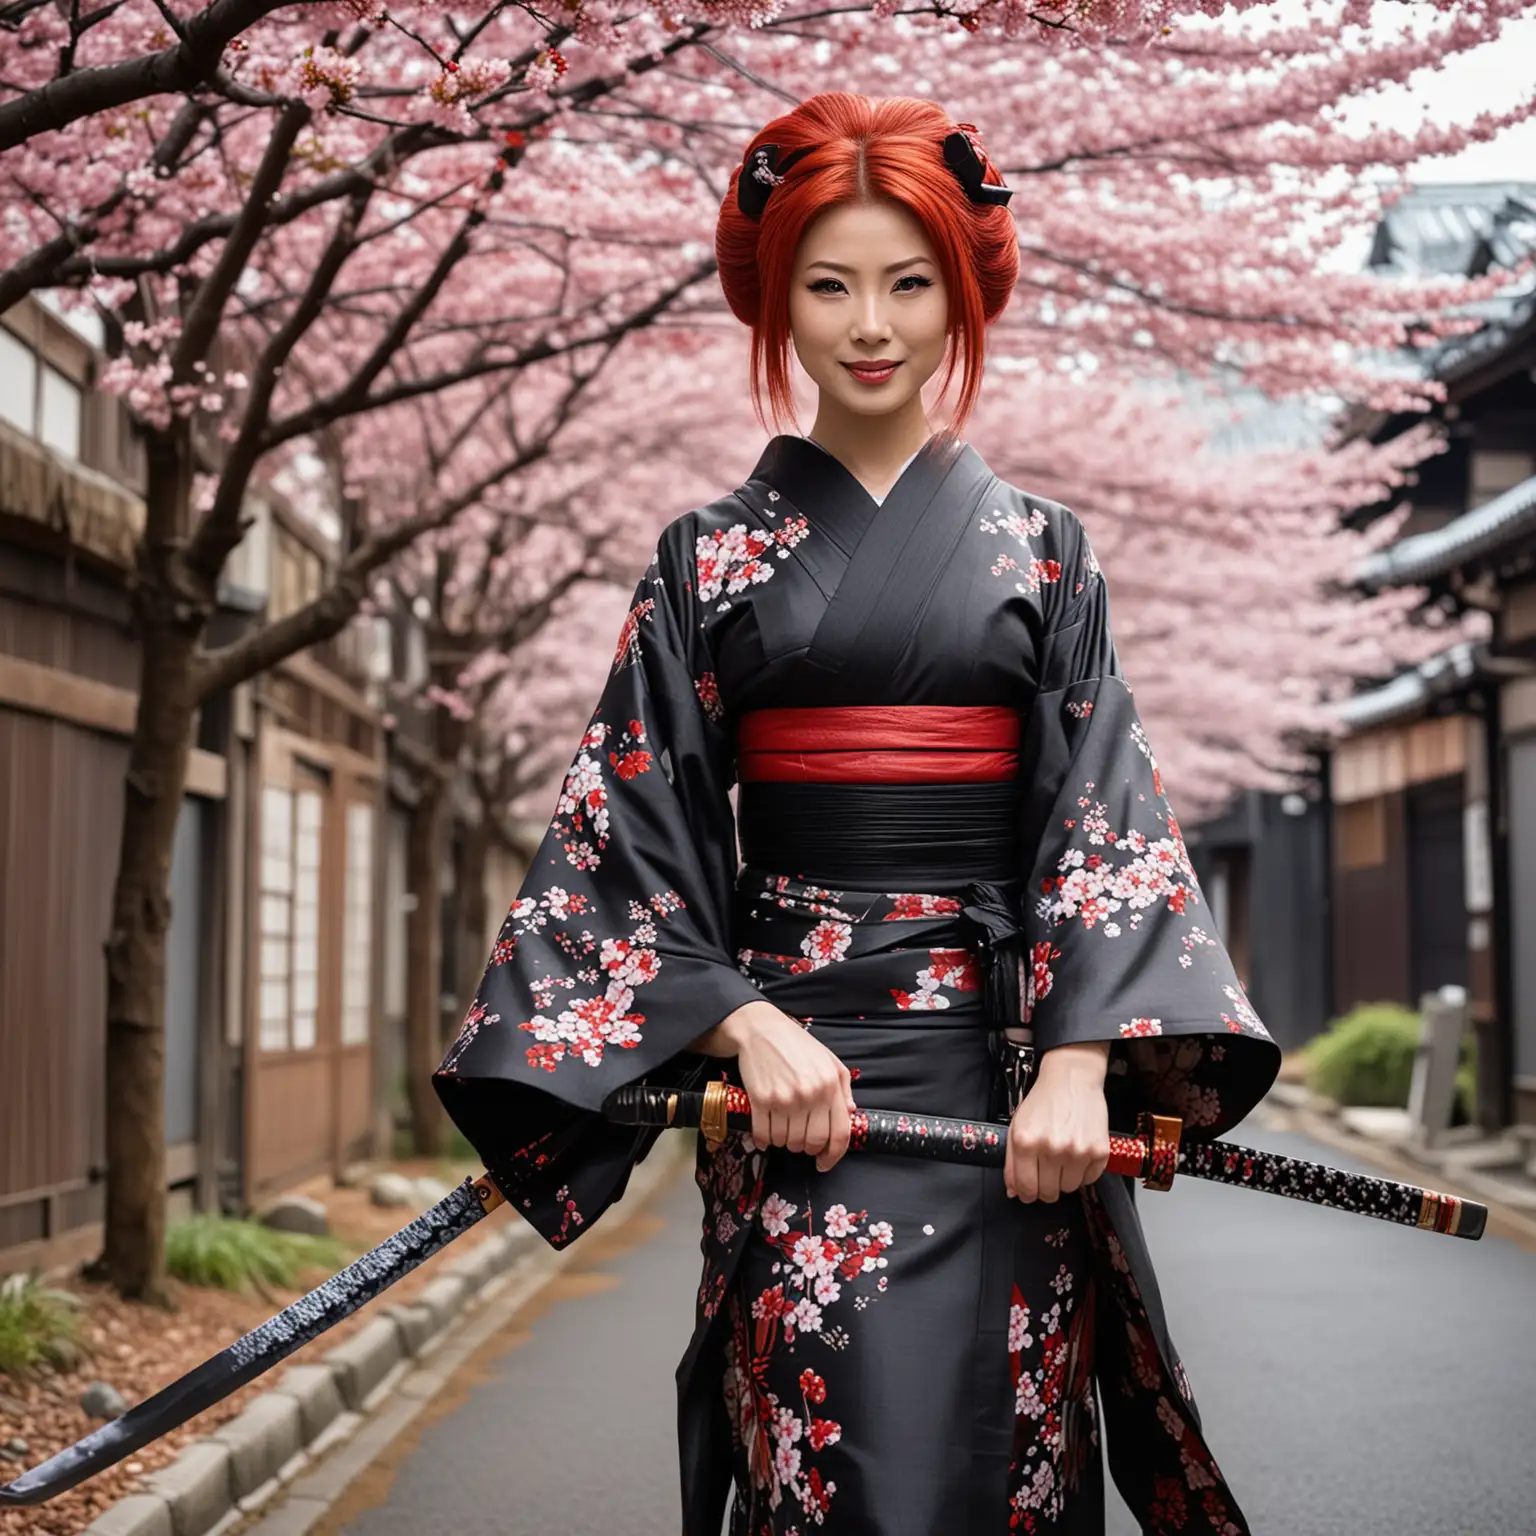 Futuristic Geisha Swordswoman in Neo Edo Streets with Blossoms